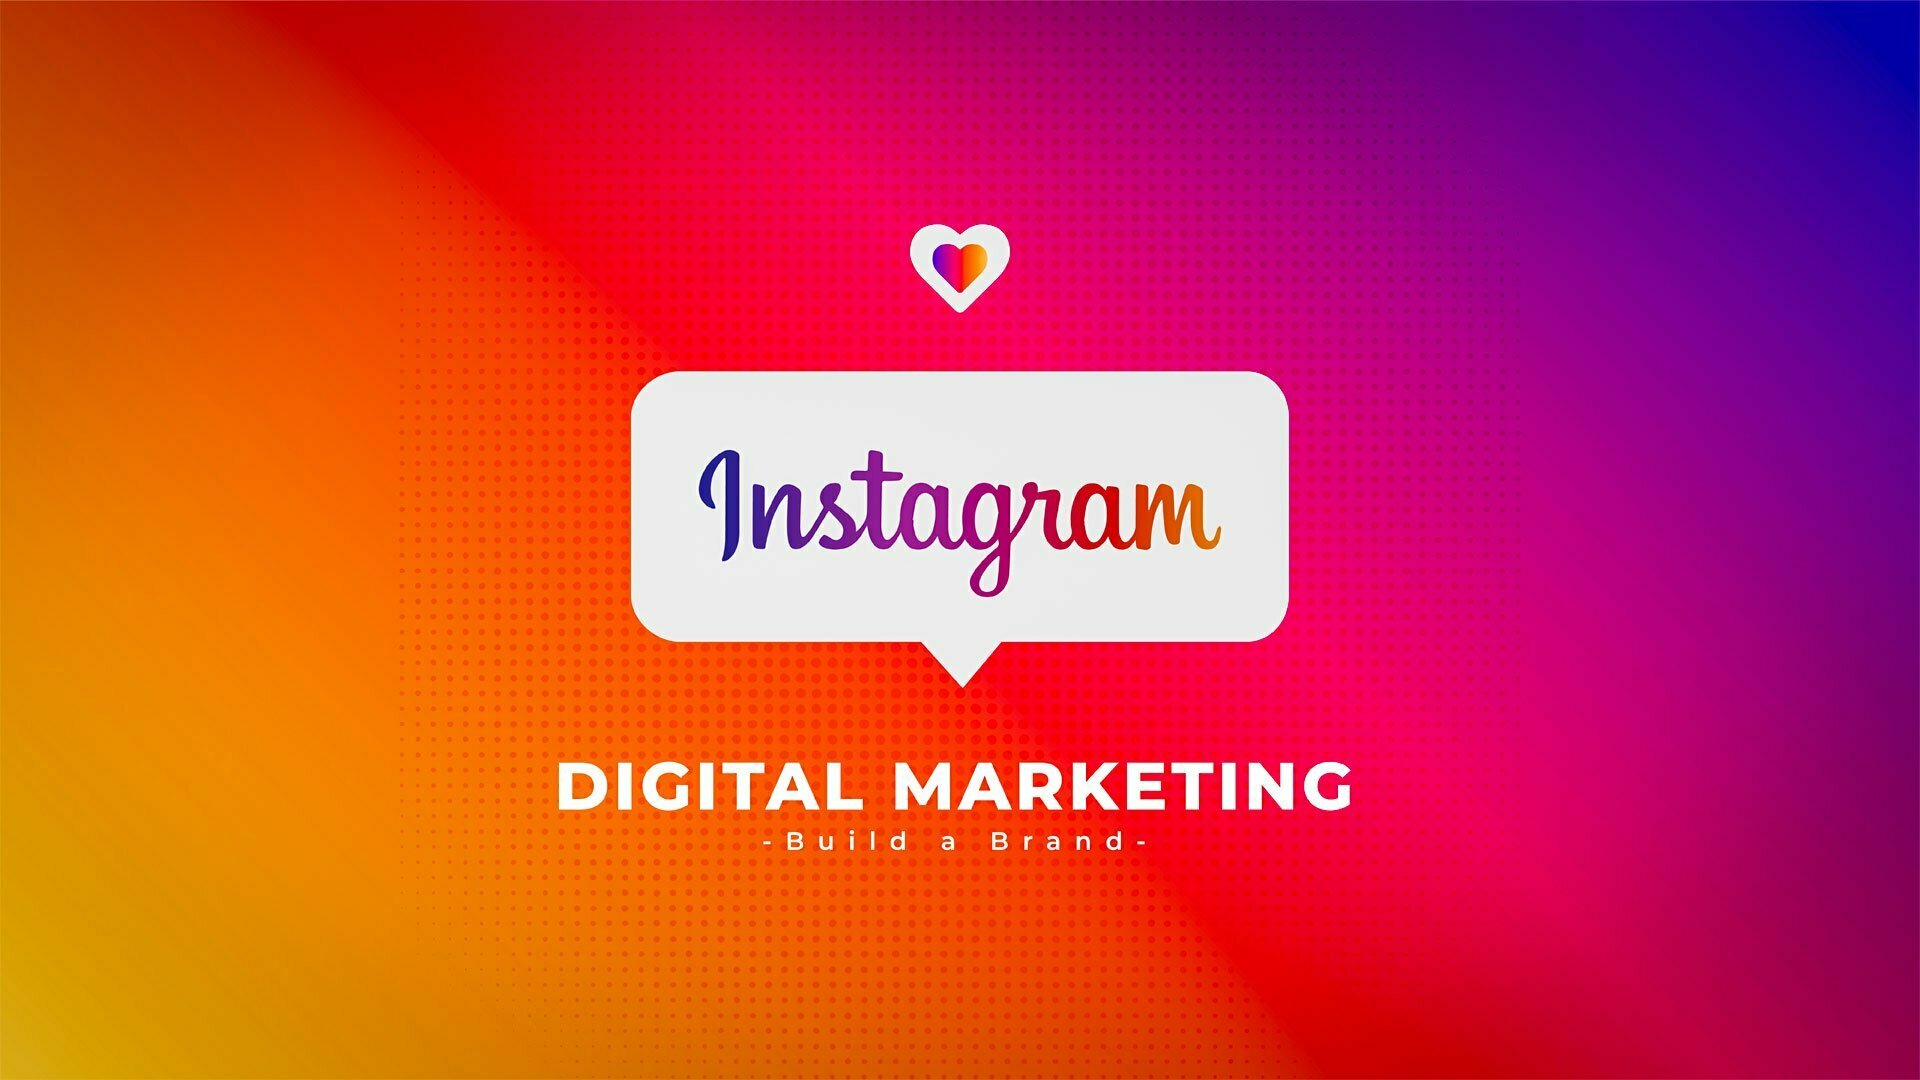 Instagram Digital Marketing Tips To build your Brand